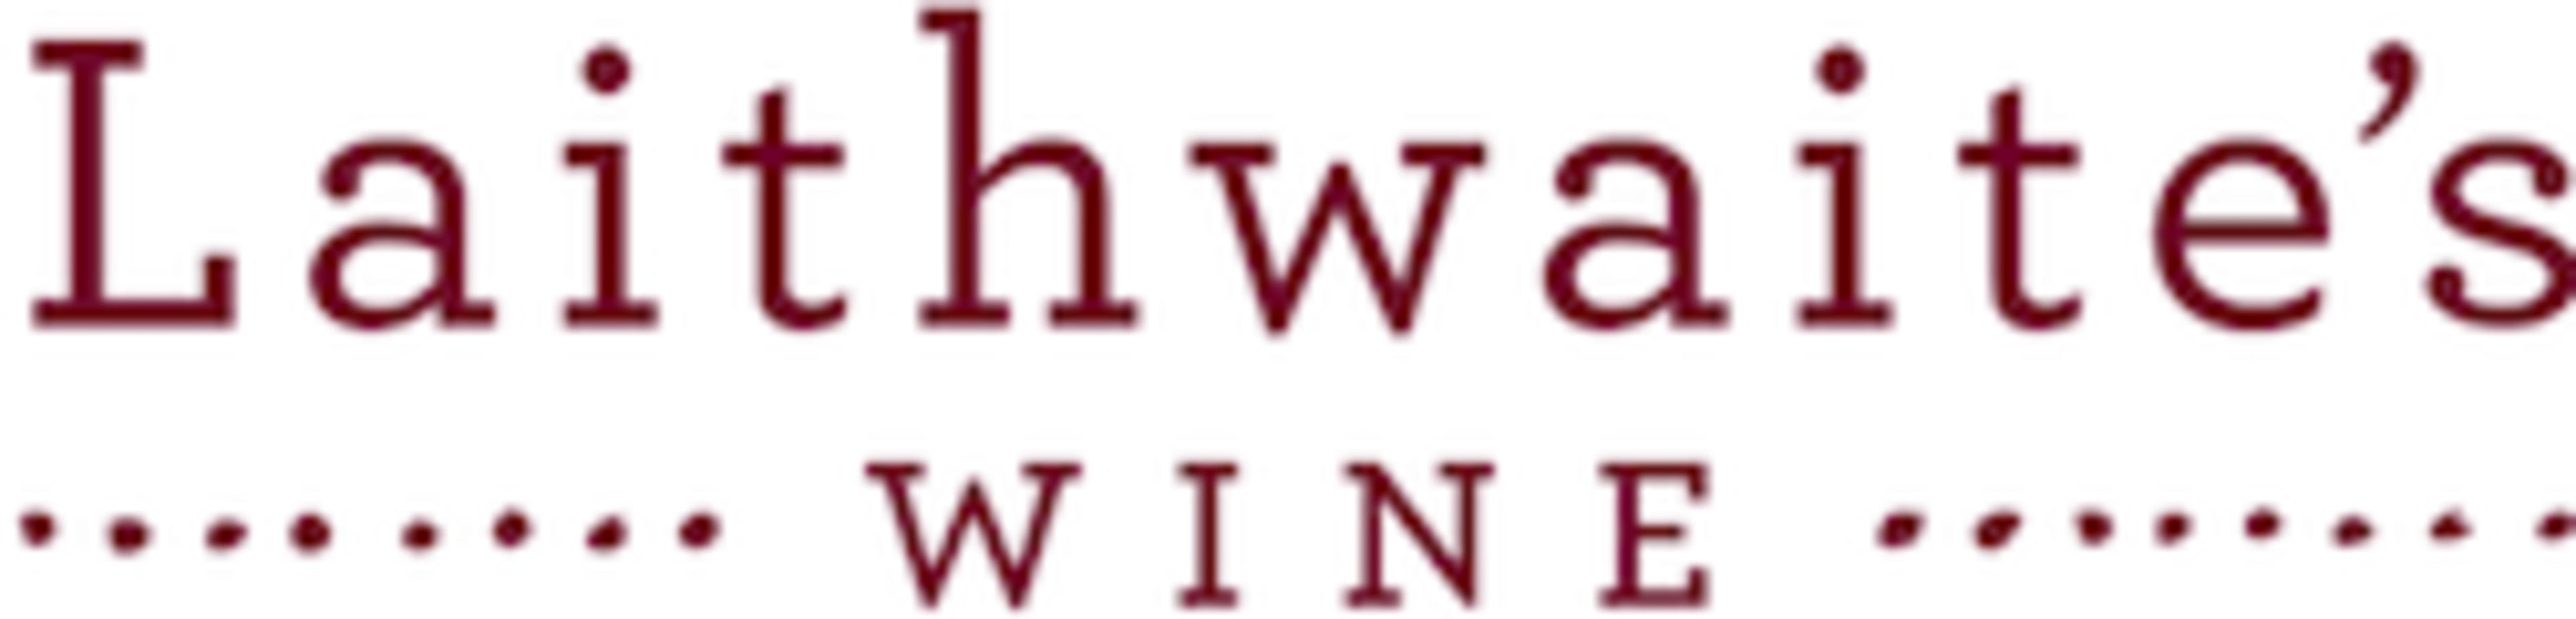 Laithwaite's Wine Code